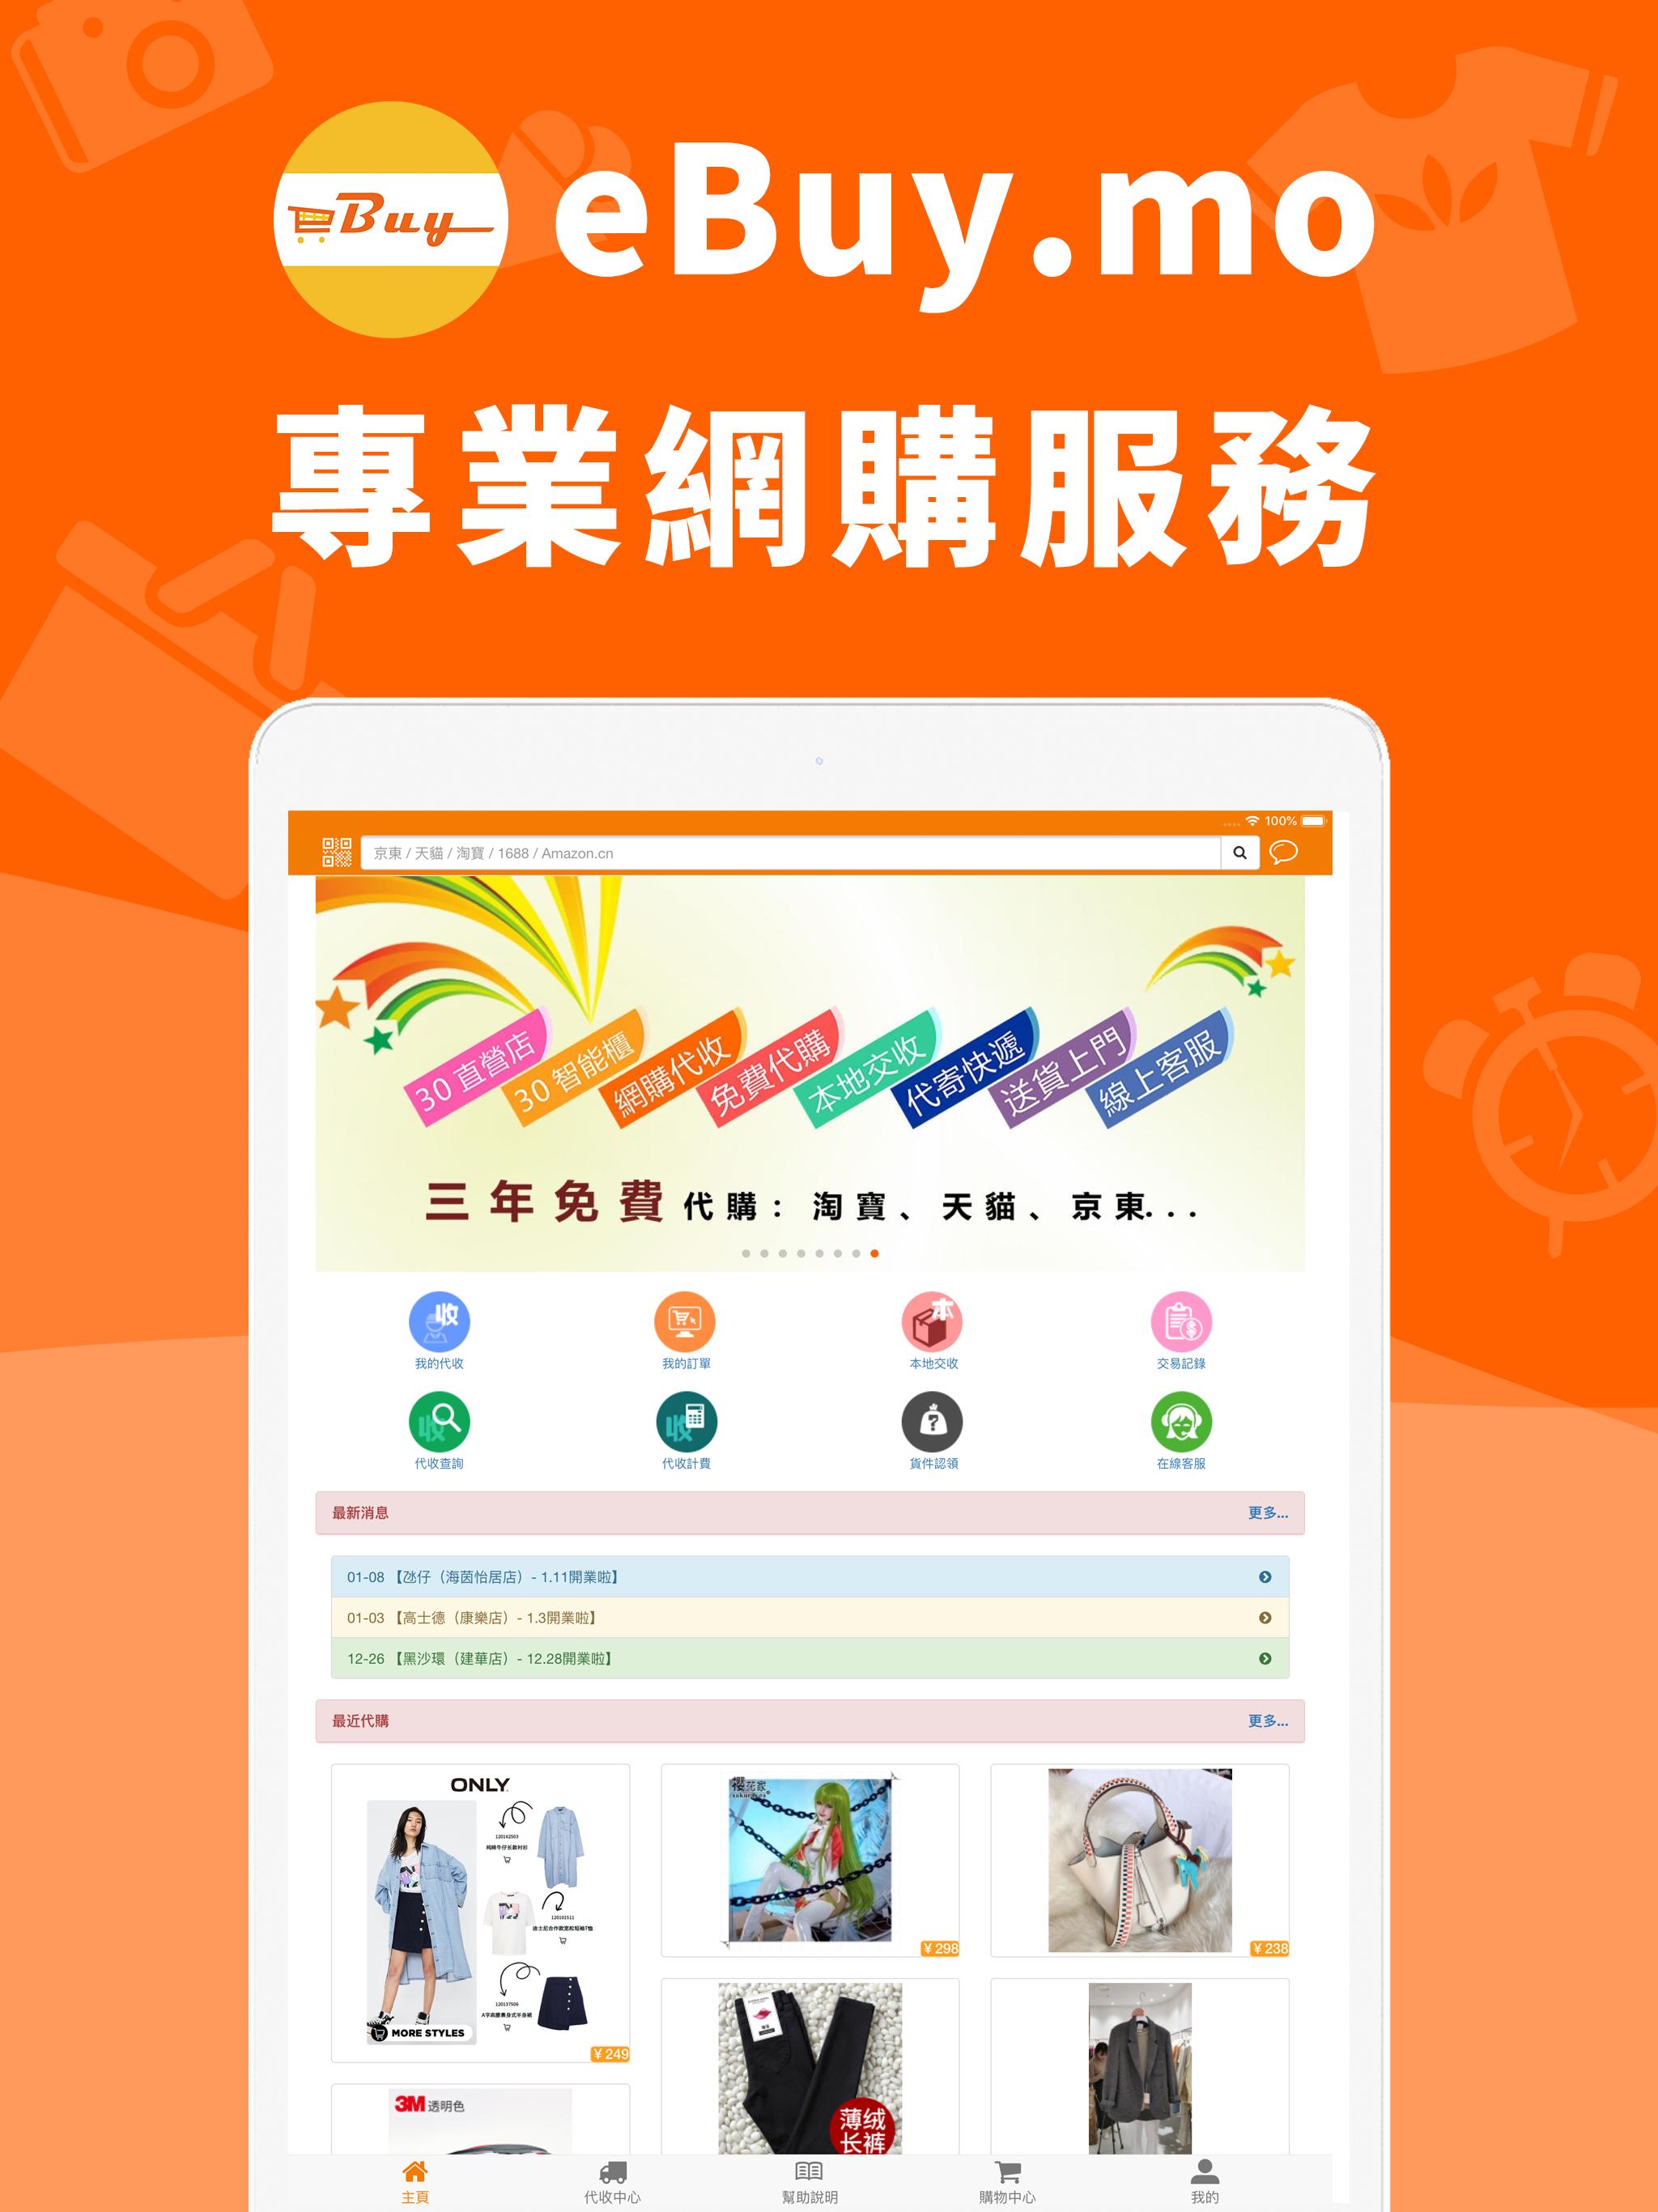 eBuy.mo 澳門易購網 2.1.4 Screenshot 15